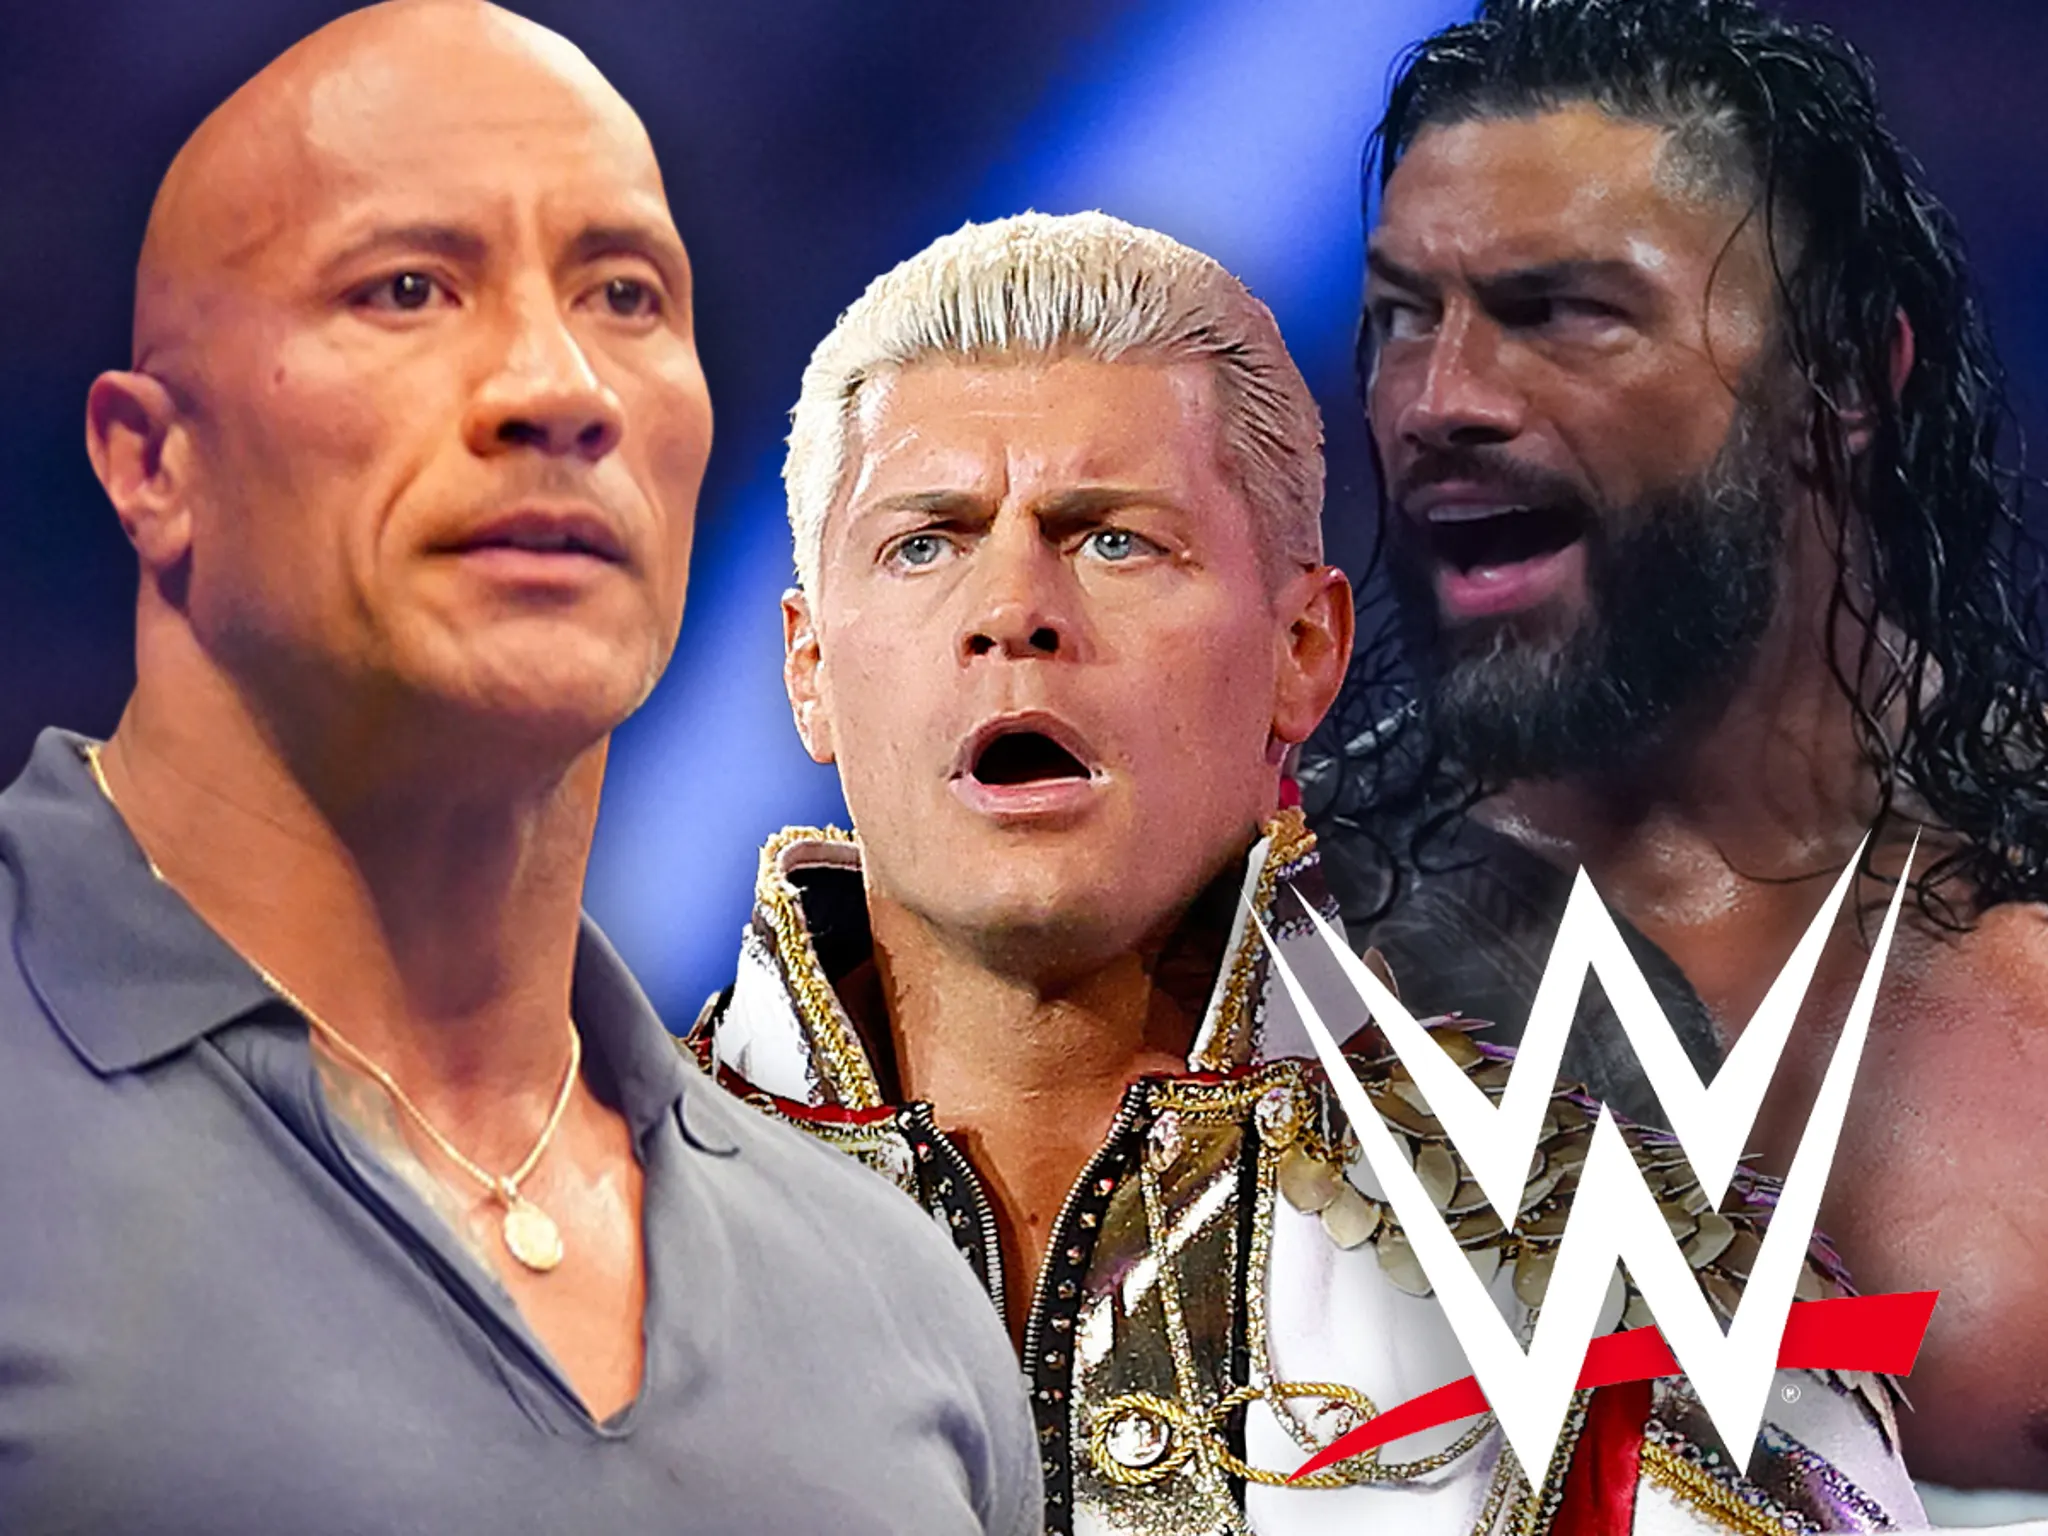 The Art of the Promo: The Rock vs. Modern WWE Superstars